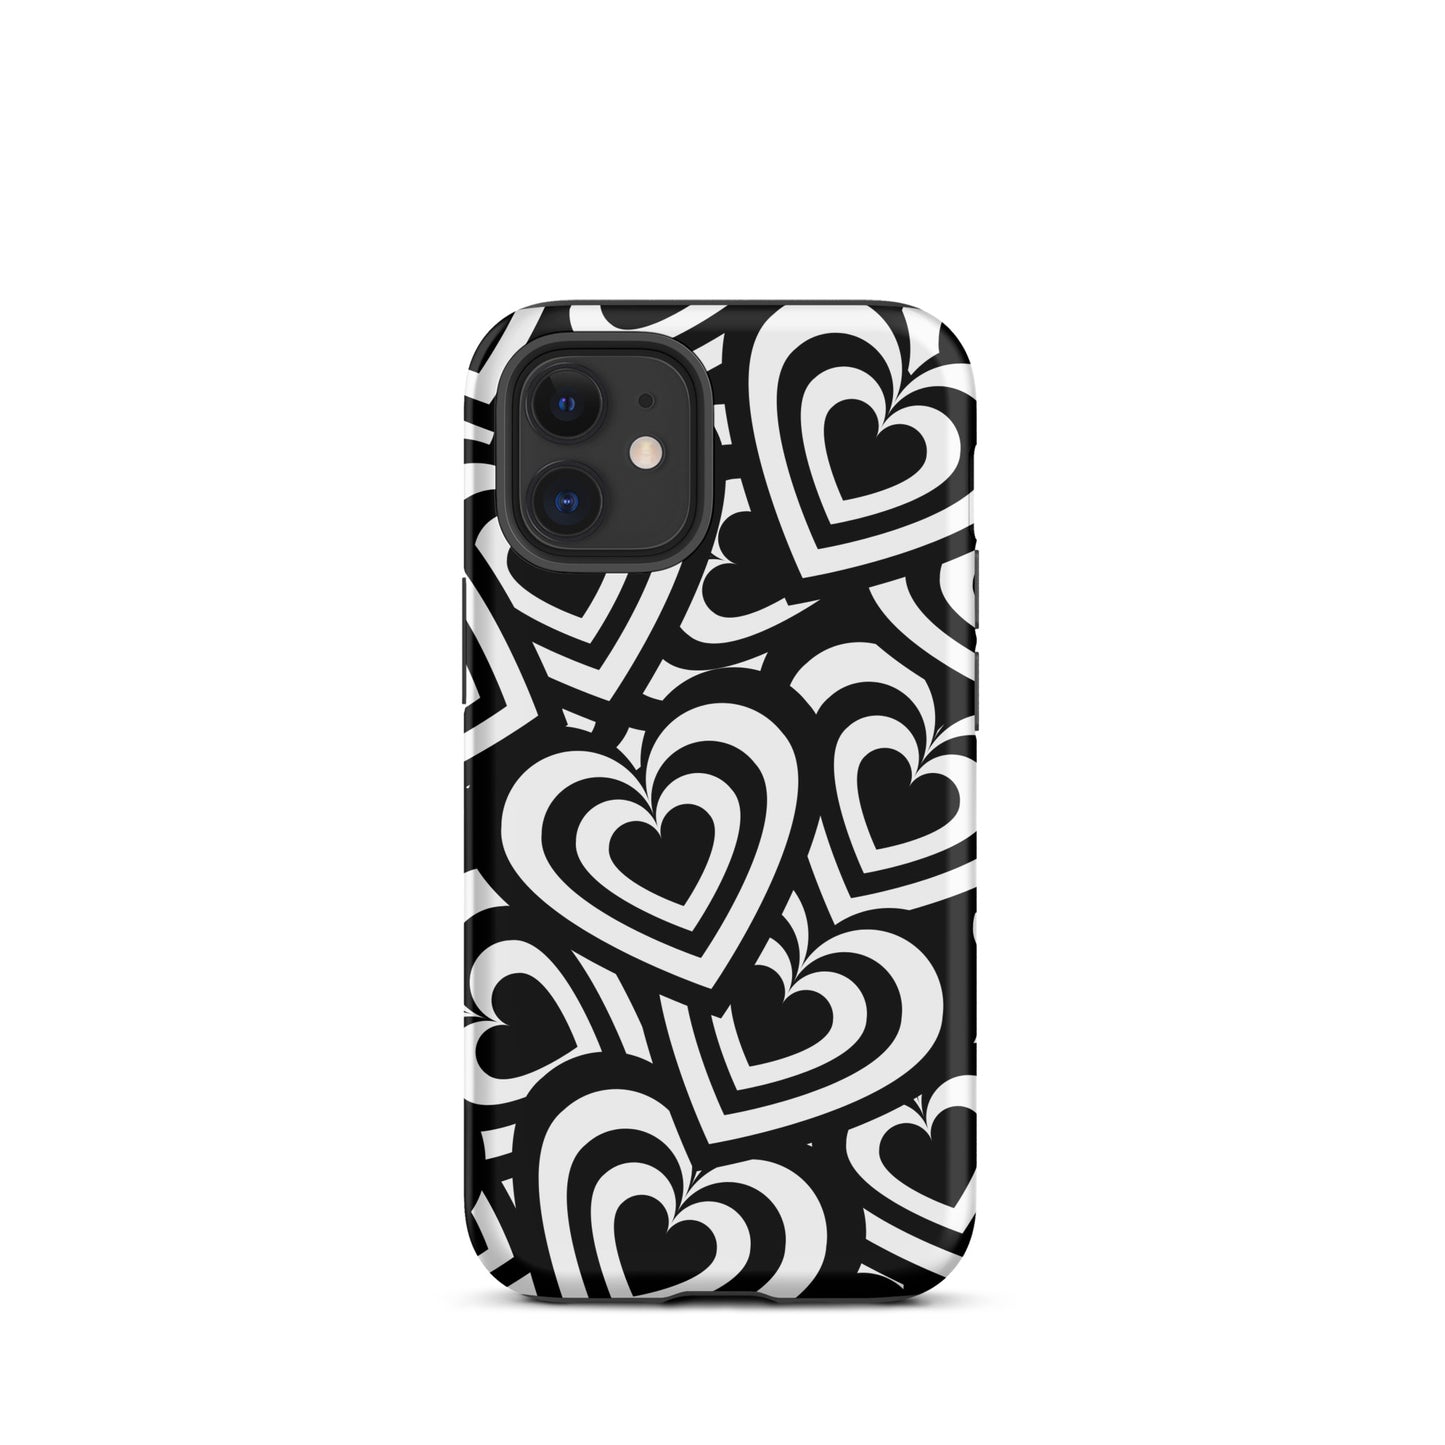 Black & White Hearts iPhone Case iPhone 12 mini Matte